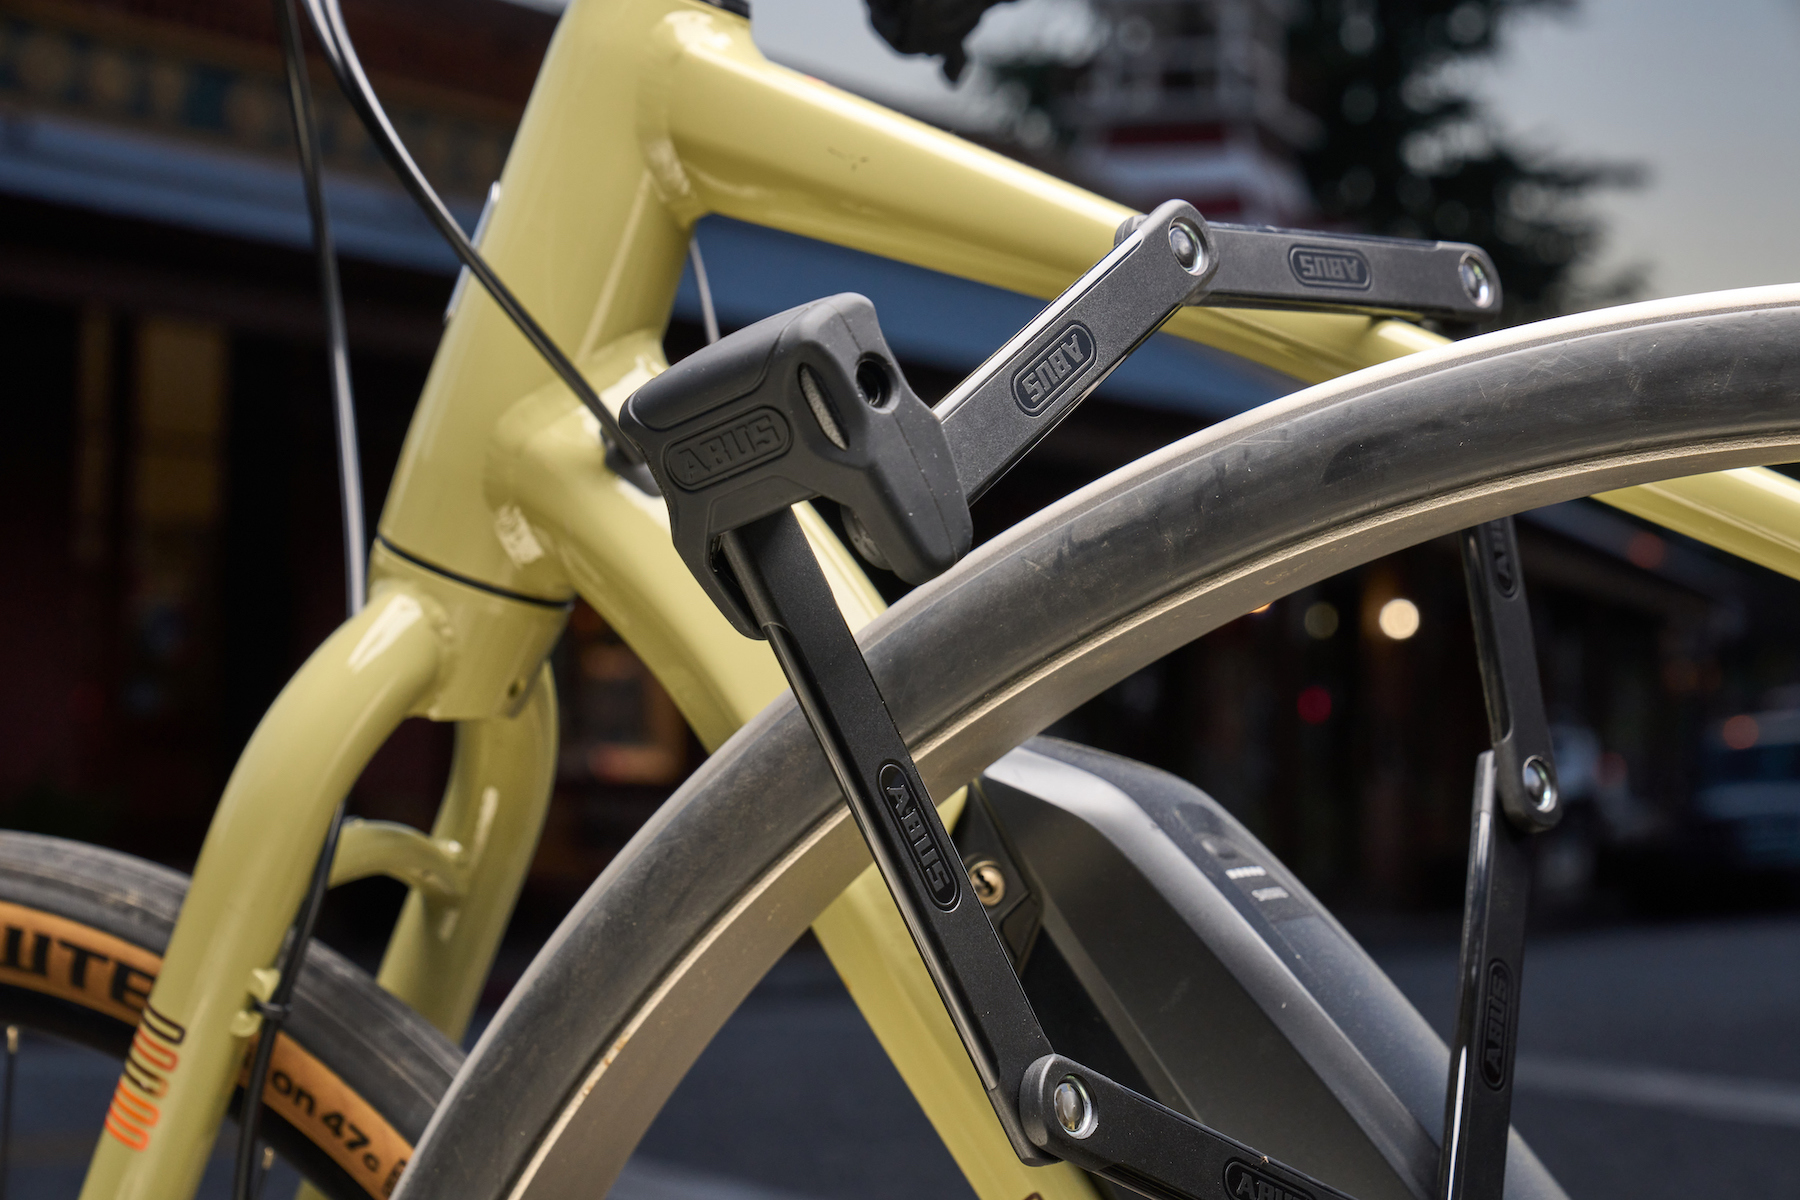 Upgraded Abus Bordo lock includes saddle mount to fit more bikes Bikerumor